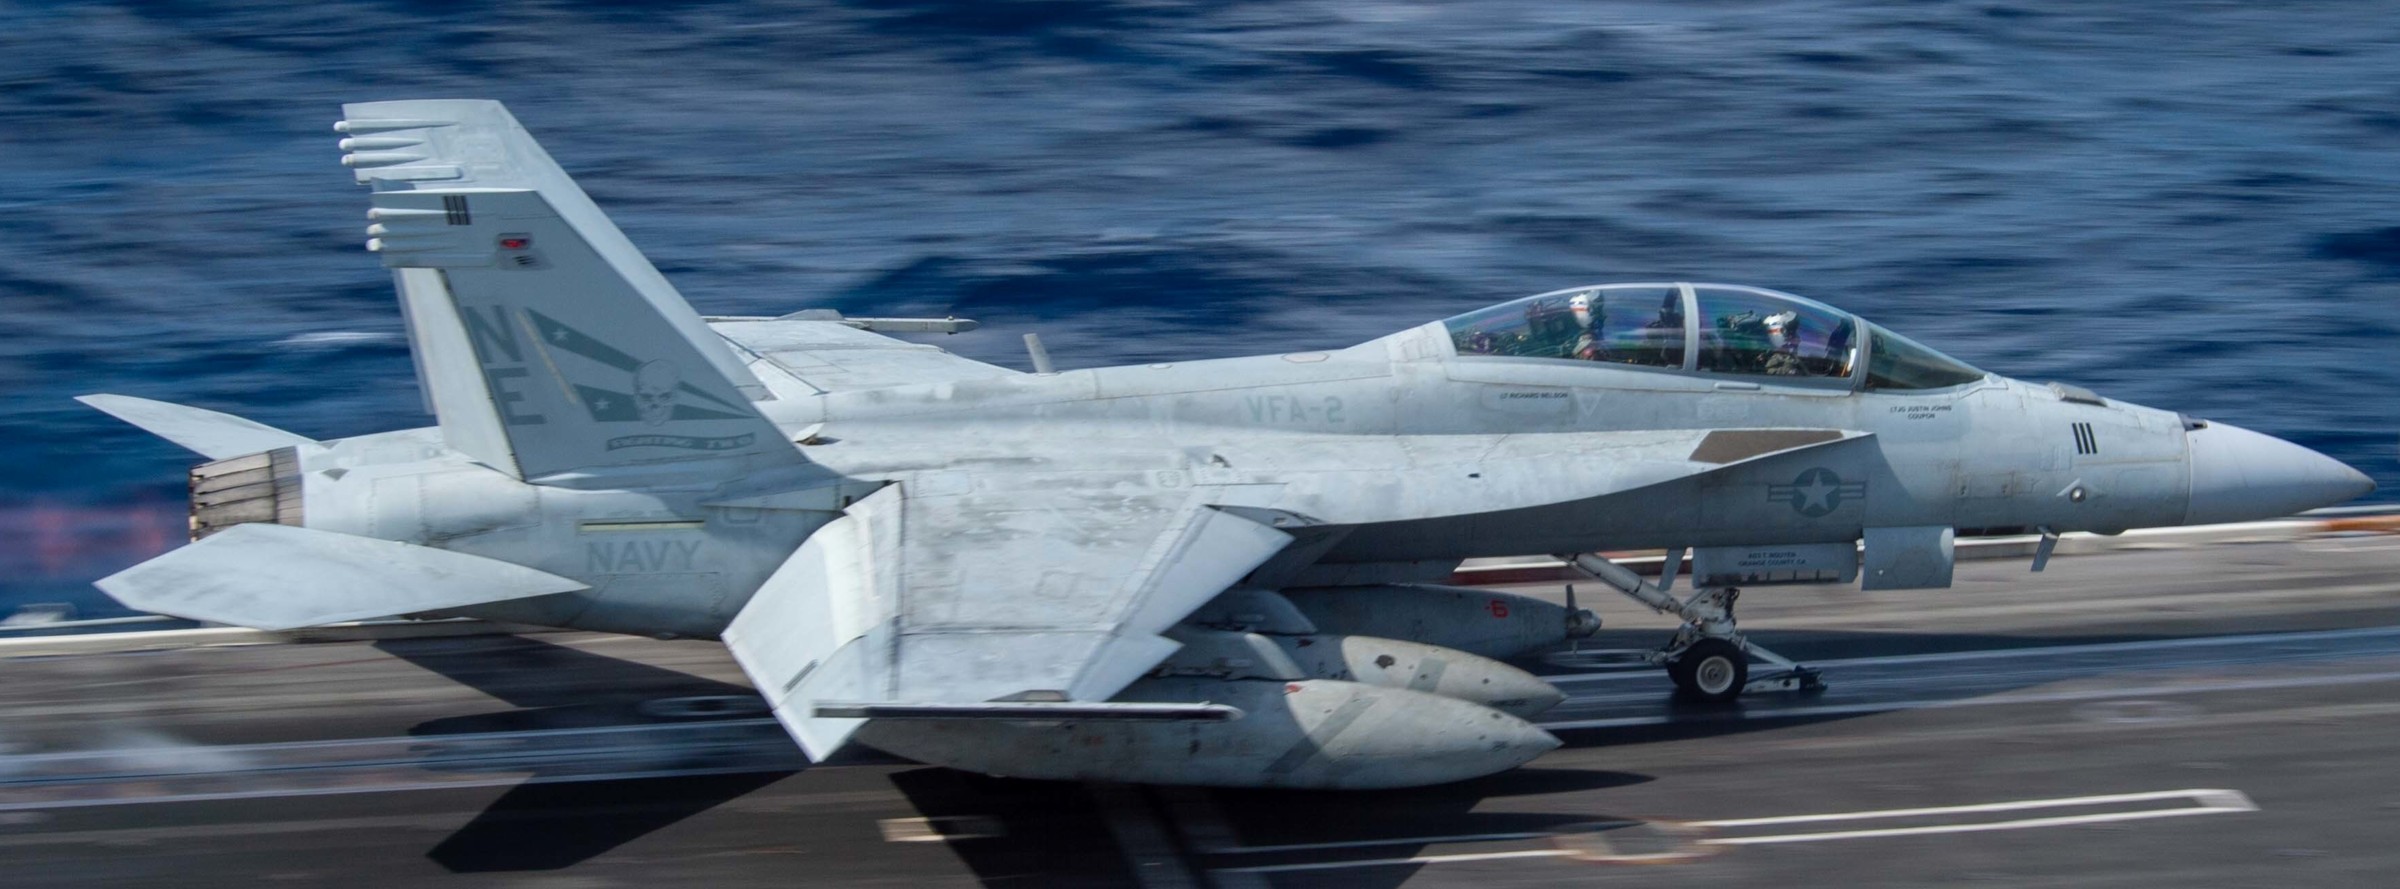 vfa-2 bounty hunters strike fighter squadron us navy f/a-18f super hornet carrier air wing cvw-2 uss carl vinson cvn-70 96